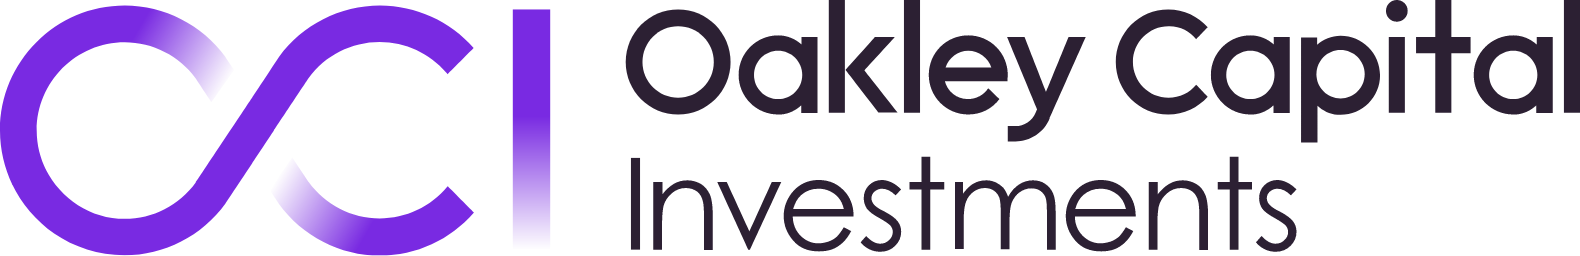 Oakley Capital Investments logo large (transparent PNG)